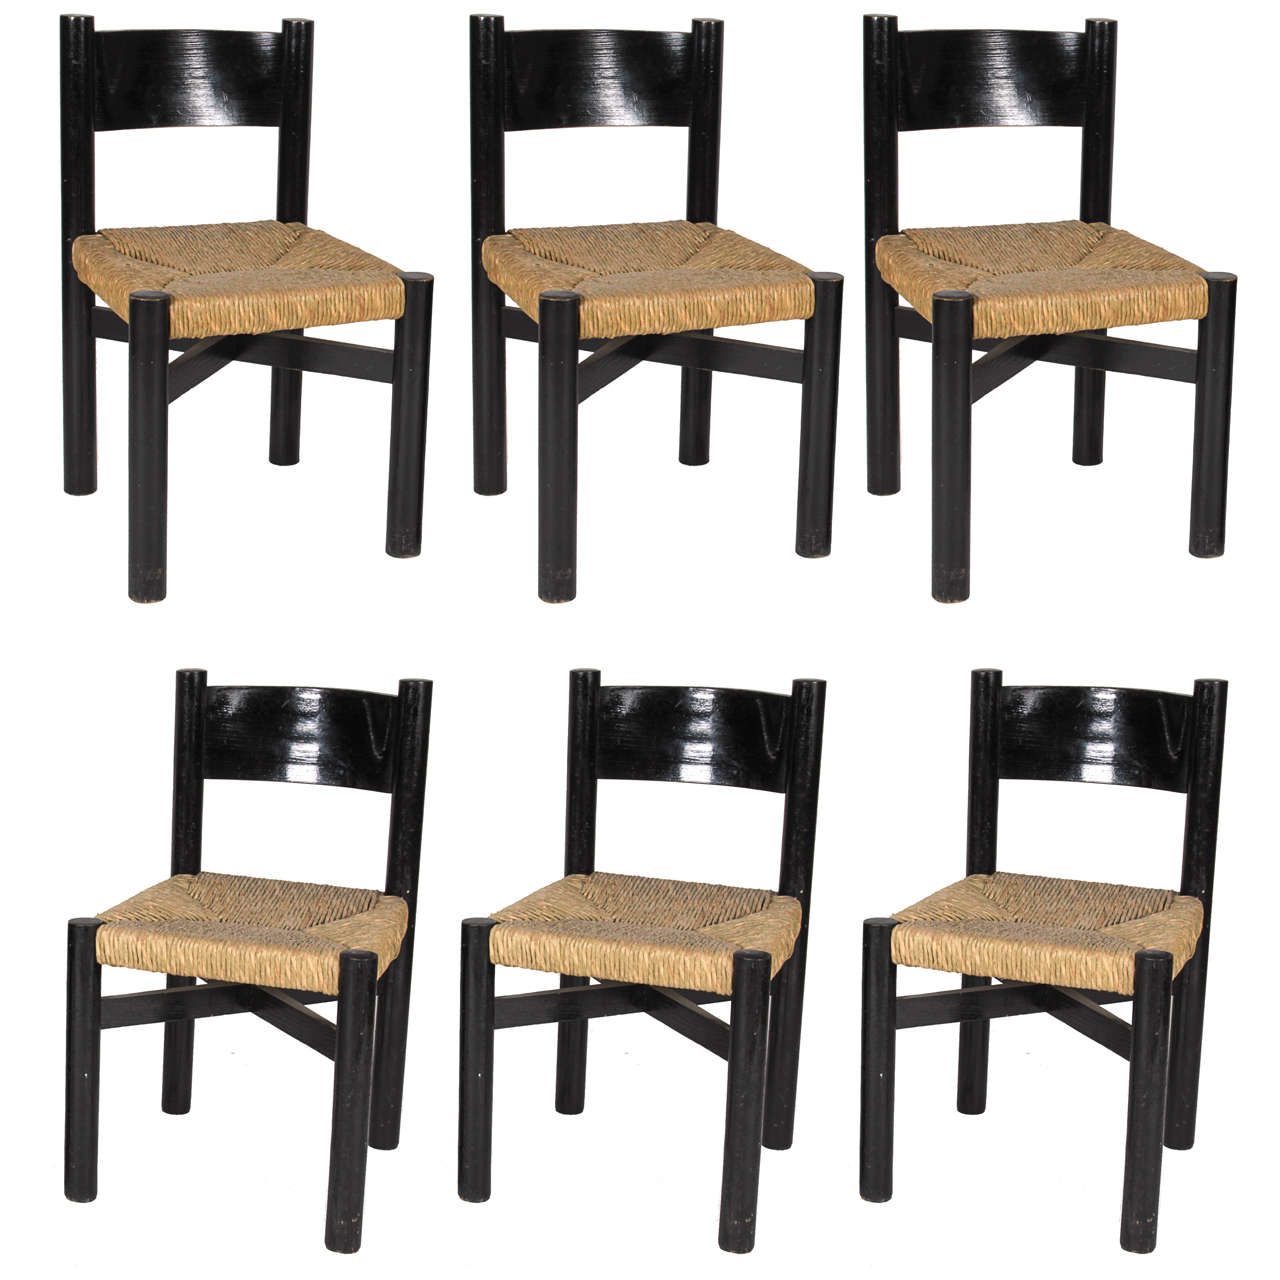 Charlotte Perriand, Six Chairs